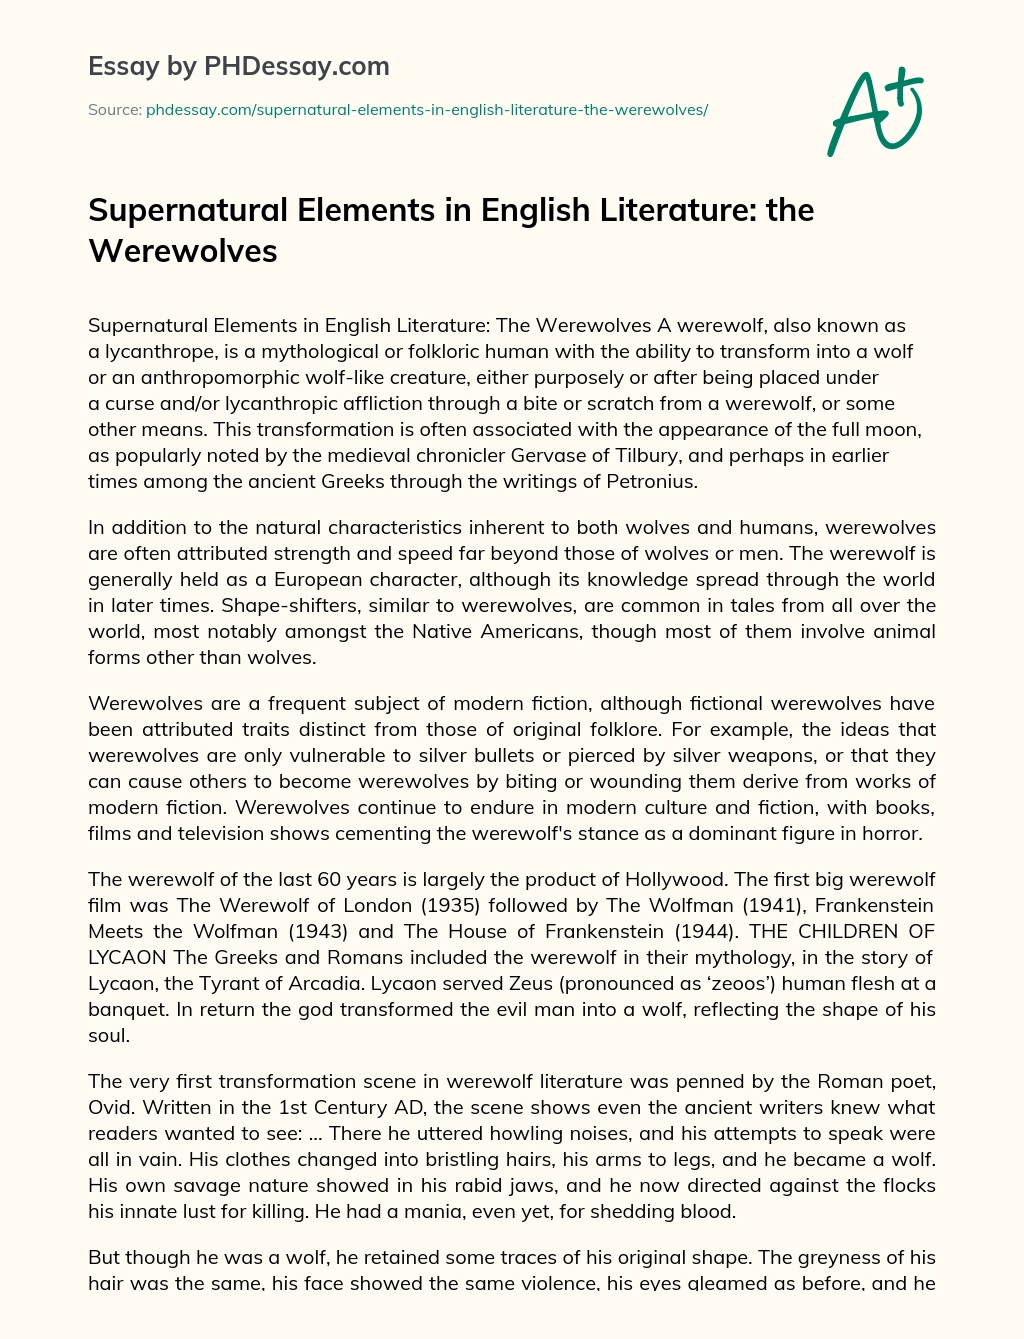 Supernatural Elements in English Literature: the Werewolves essay